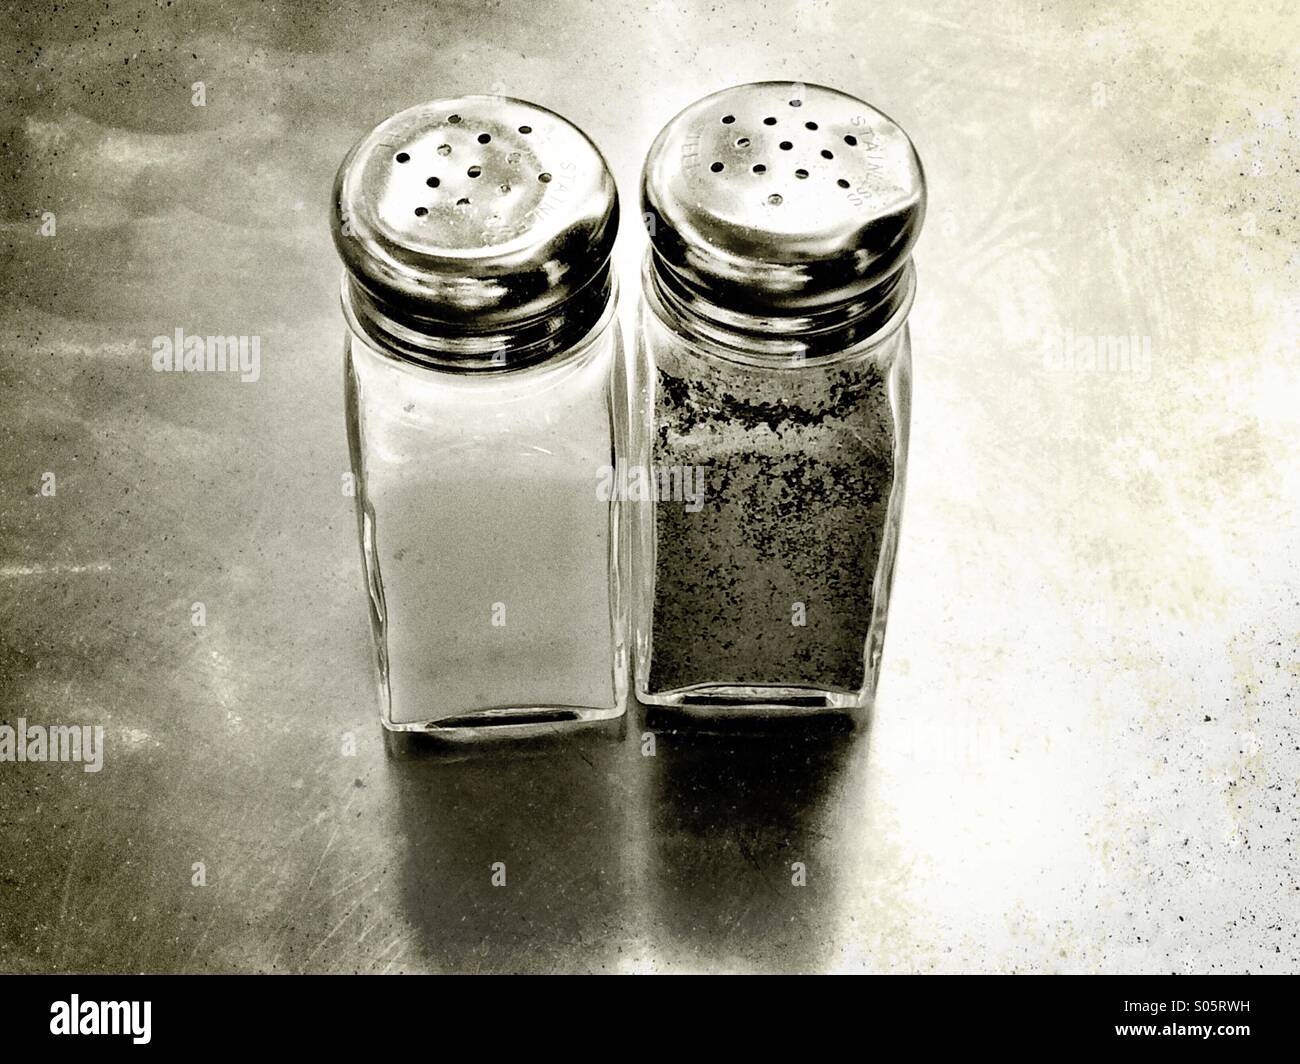 salt-and-pepper-shakers-S05RWH.jpg